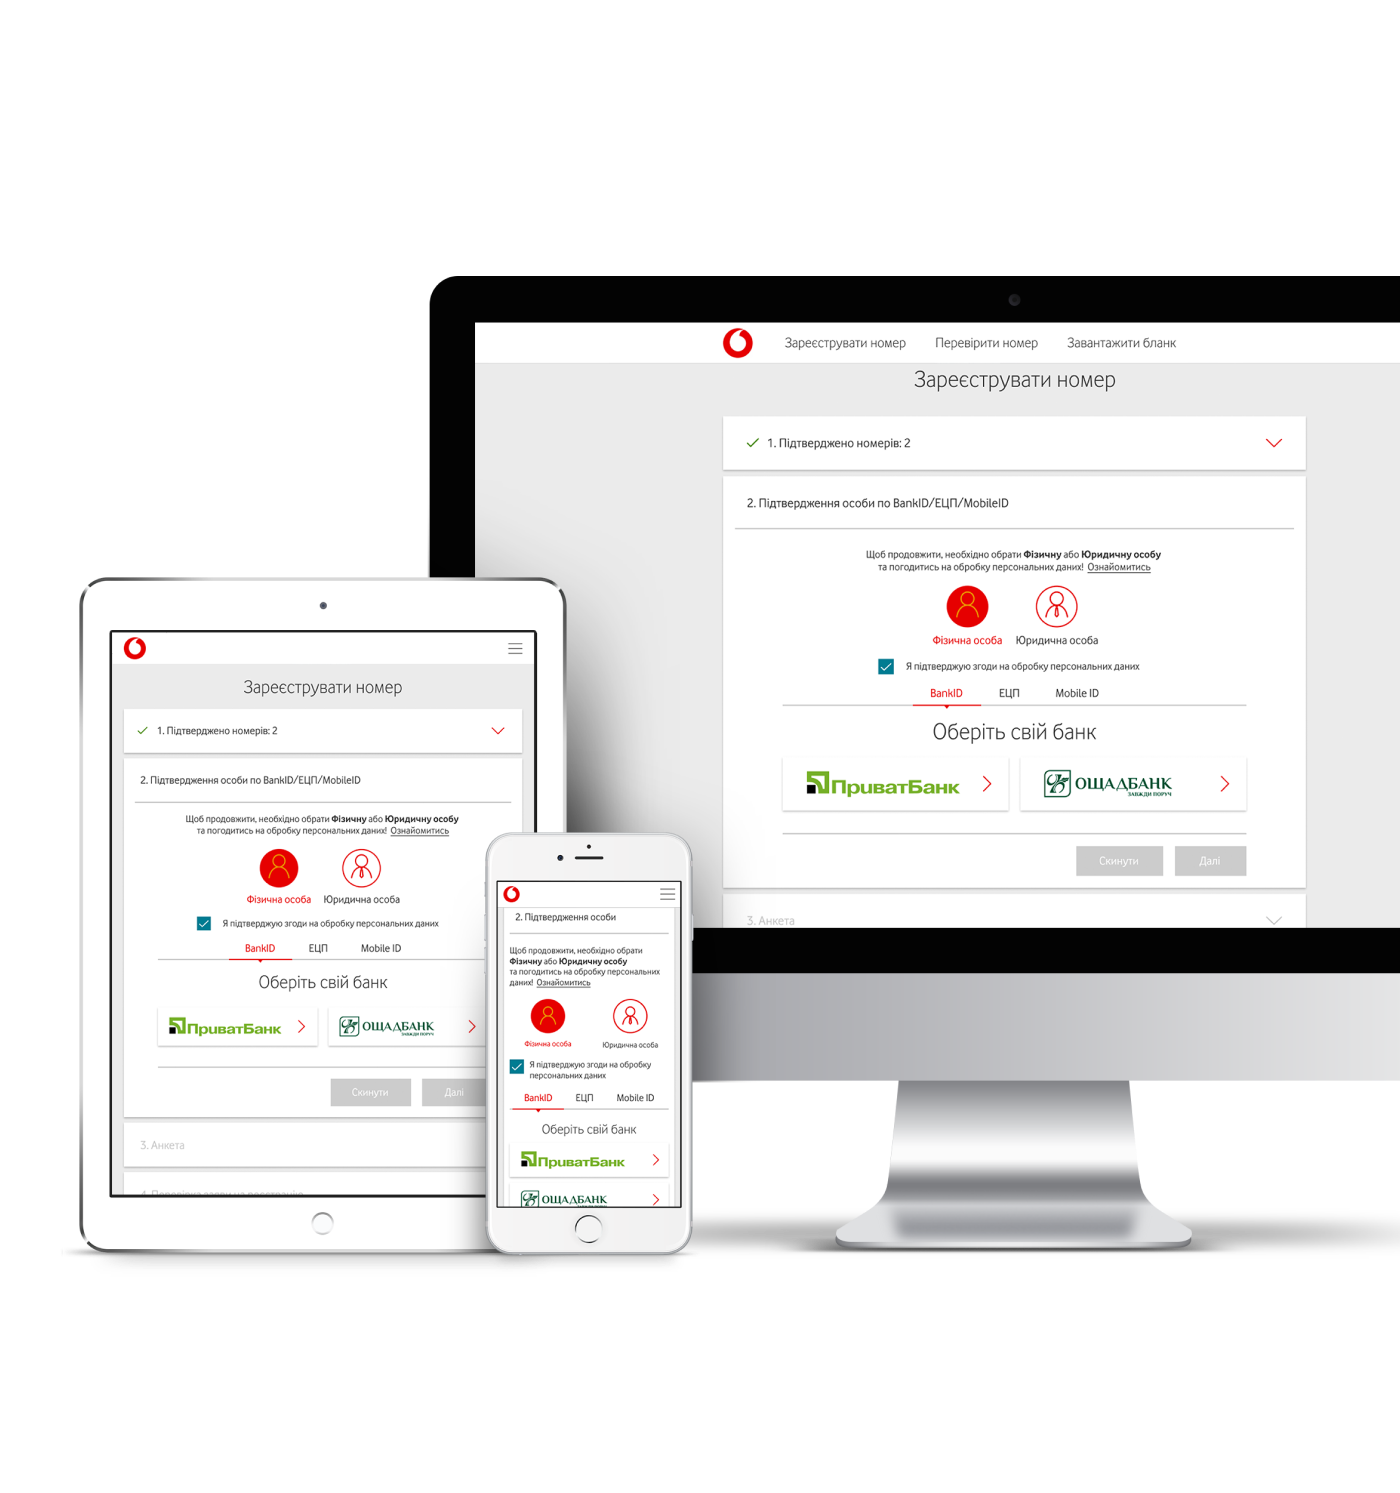 Vodafone Ukraine: customers certification service